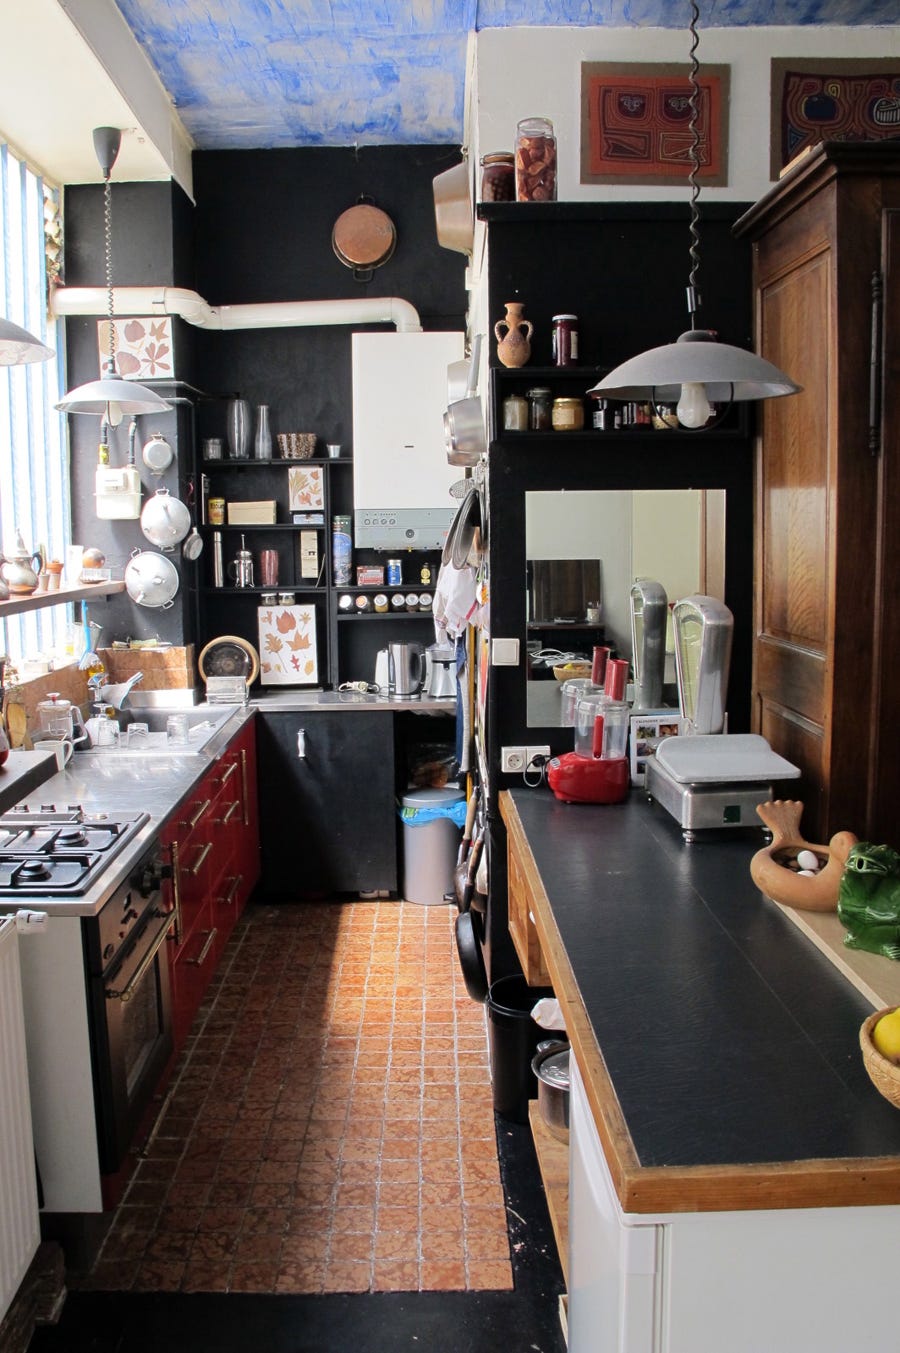 The Making of My Paris Kitchen - David Lebovitz